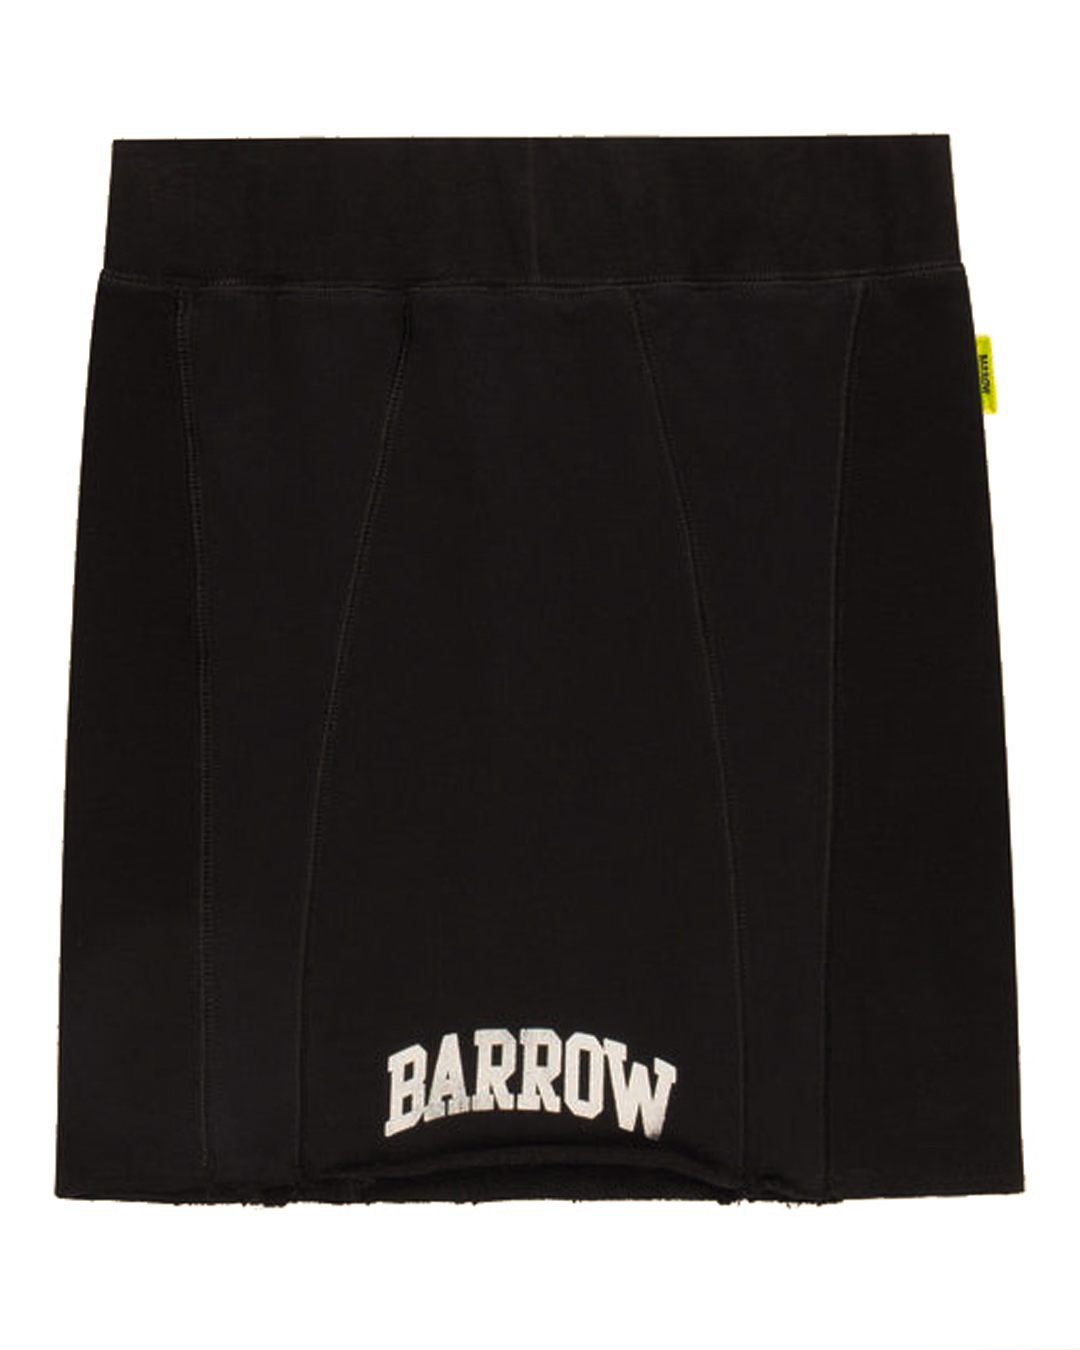 юбка BARROW S4BWWOSK118 черный l, размер l